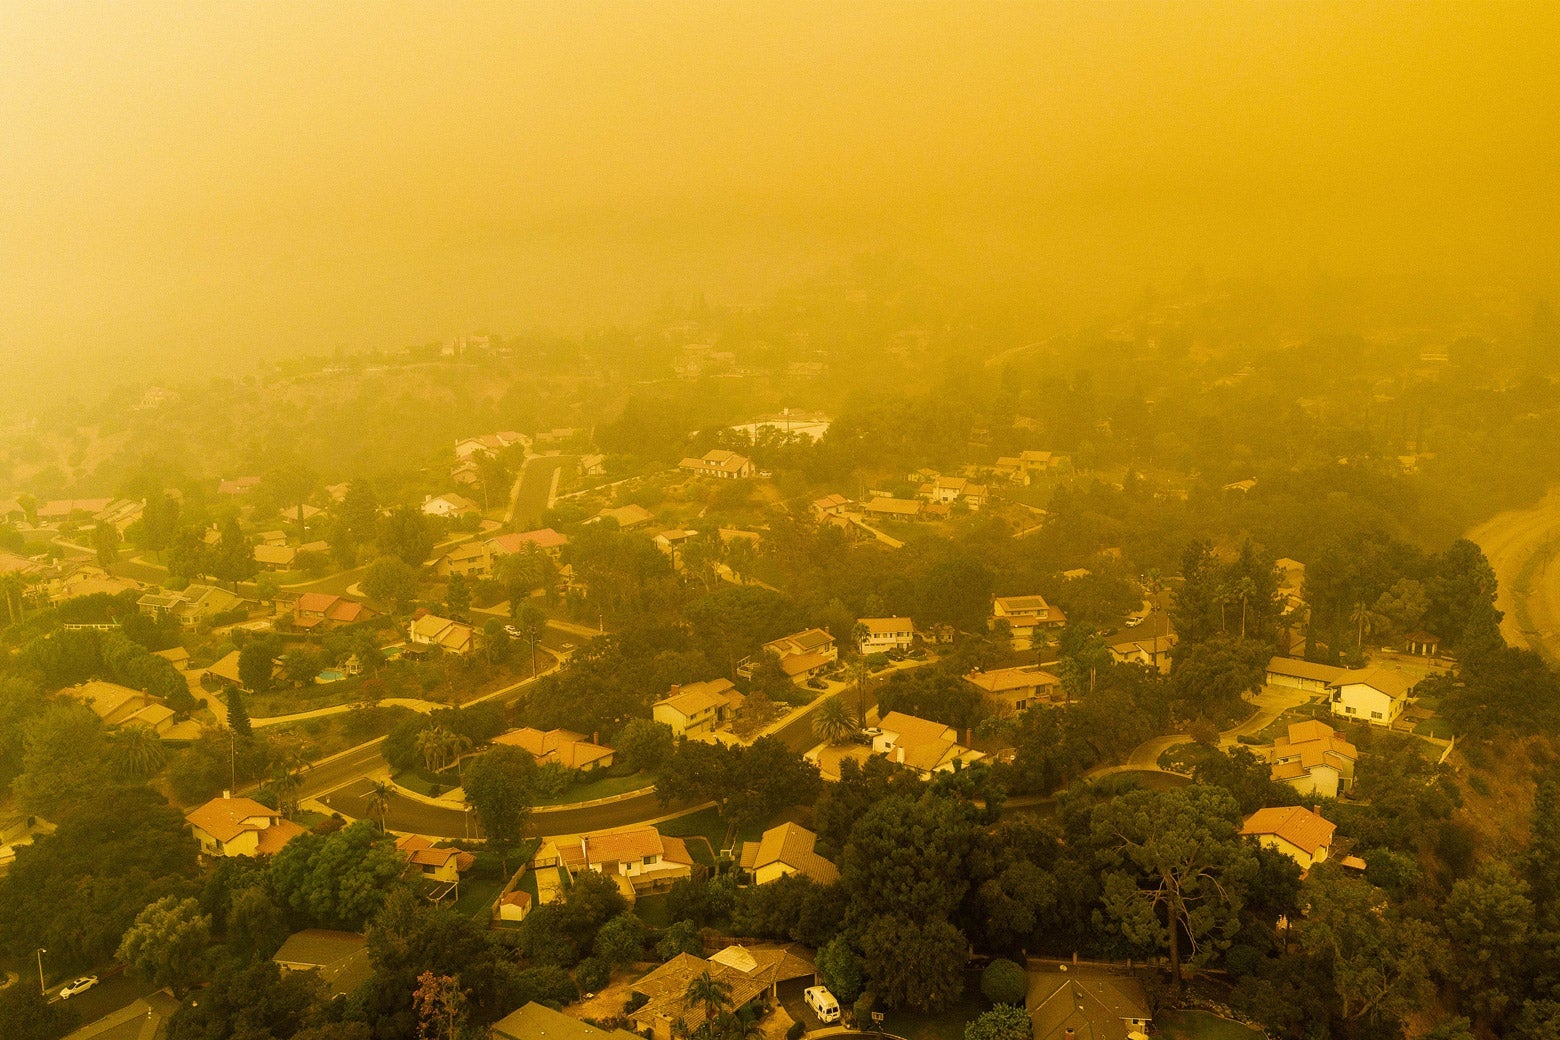 An aerial view of houses in a neighborhood beneath a cloud of orange smoke.